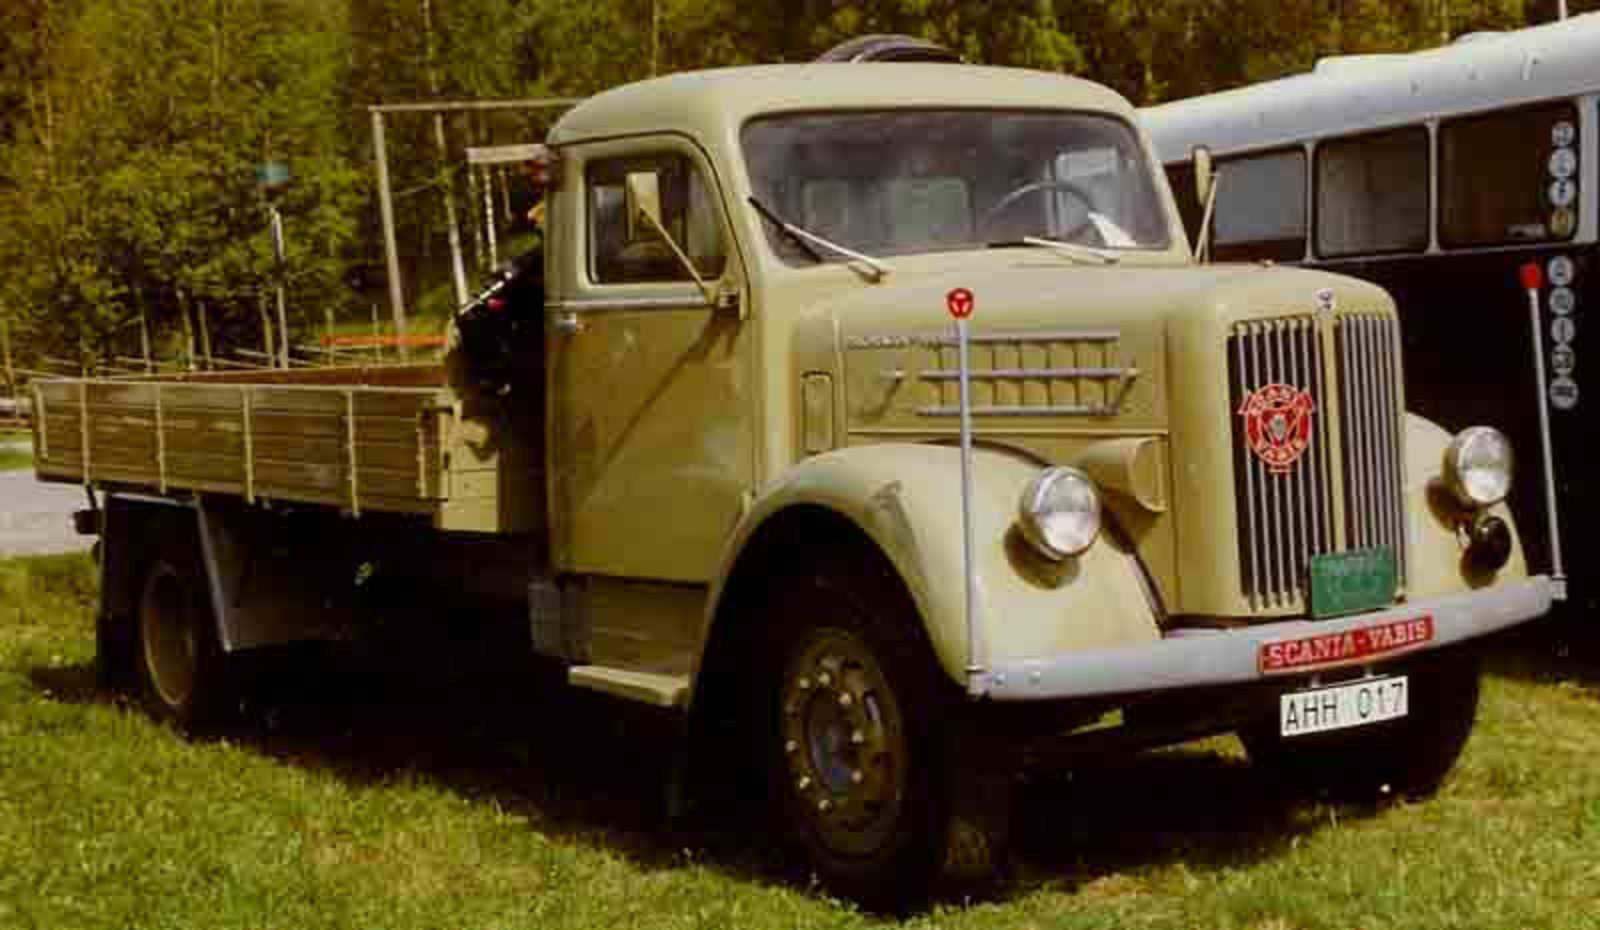 File:Scania-Vabis L51 Truck 1959.jpg - Wikimedia Commons